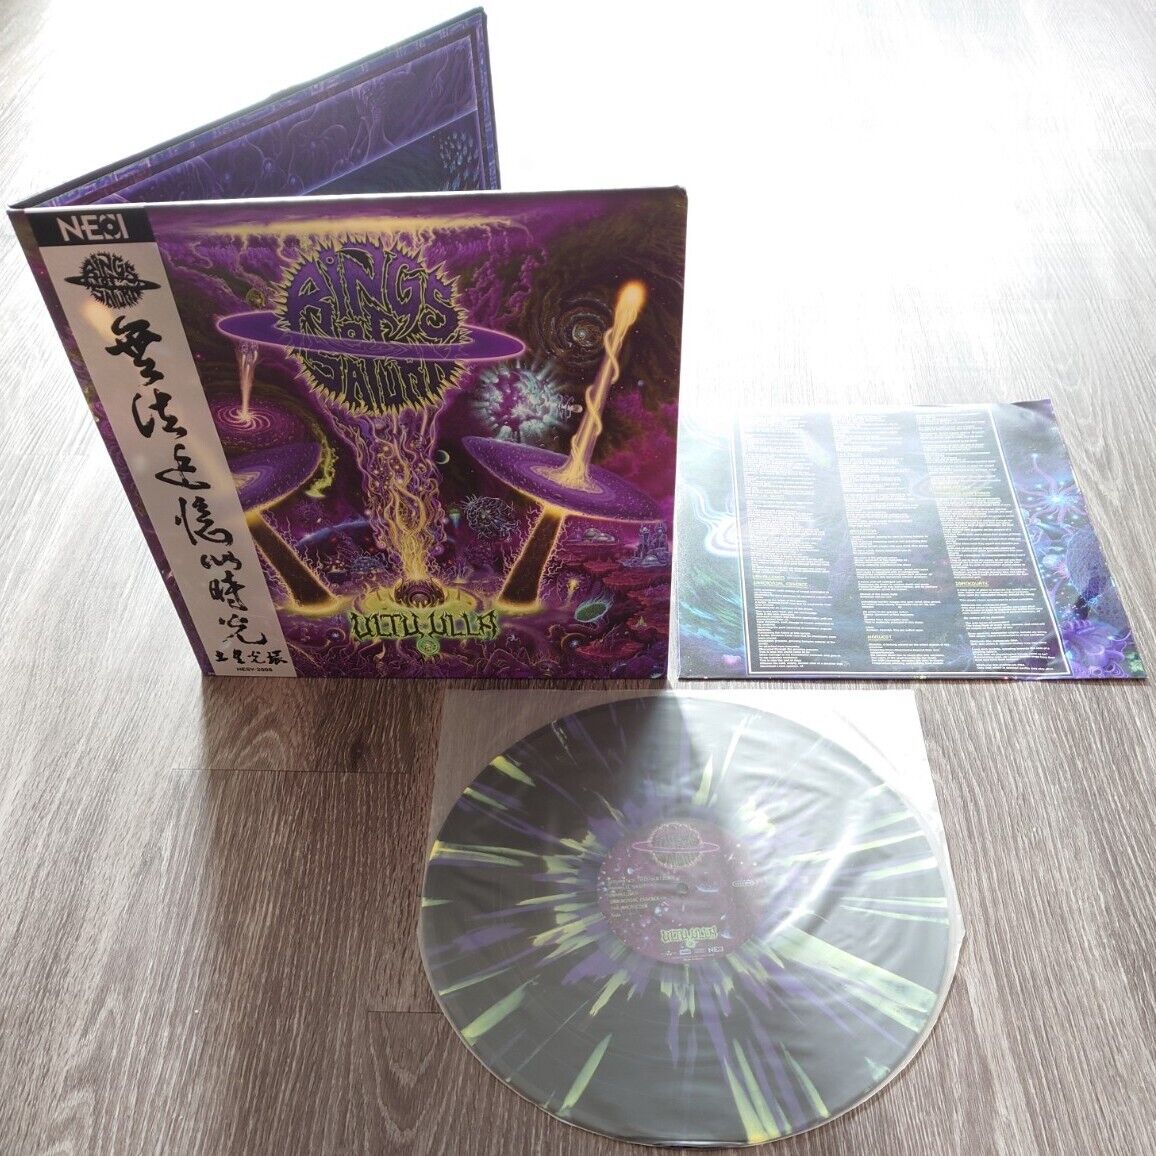 Rings Of Saturn – Ultu Ulla LP (China Edition Black+Purple/Yellow Splatter Nesi)